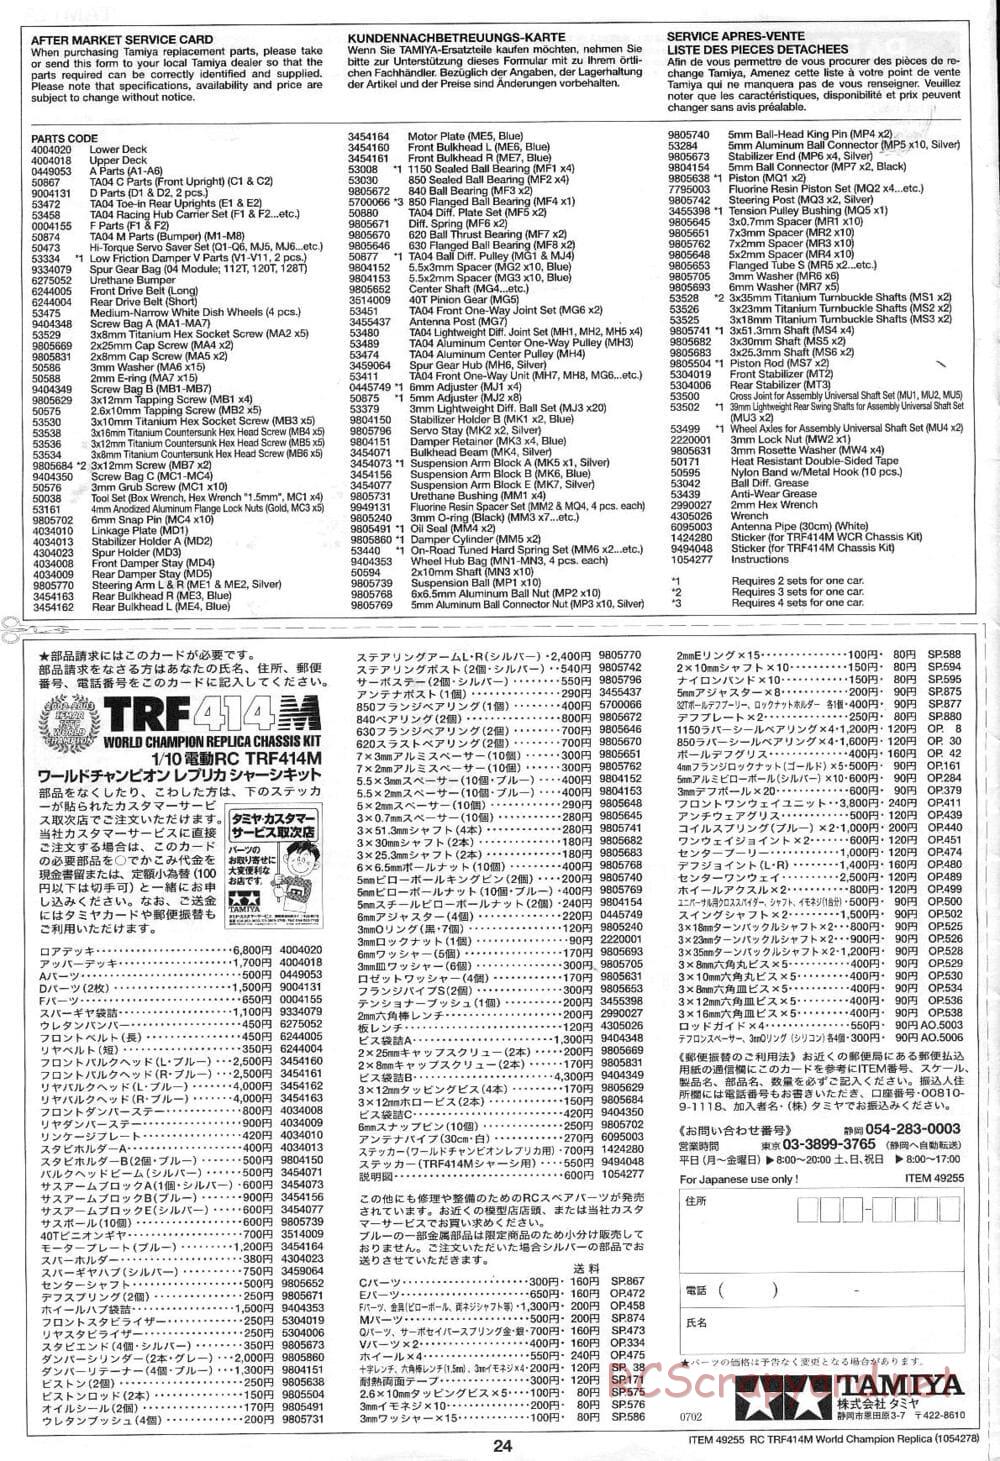 Tamiya - TRF414M World Champion Replica Chassis - Manual - Page 24